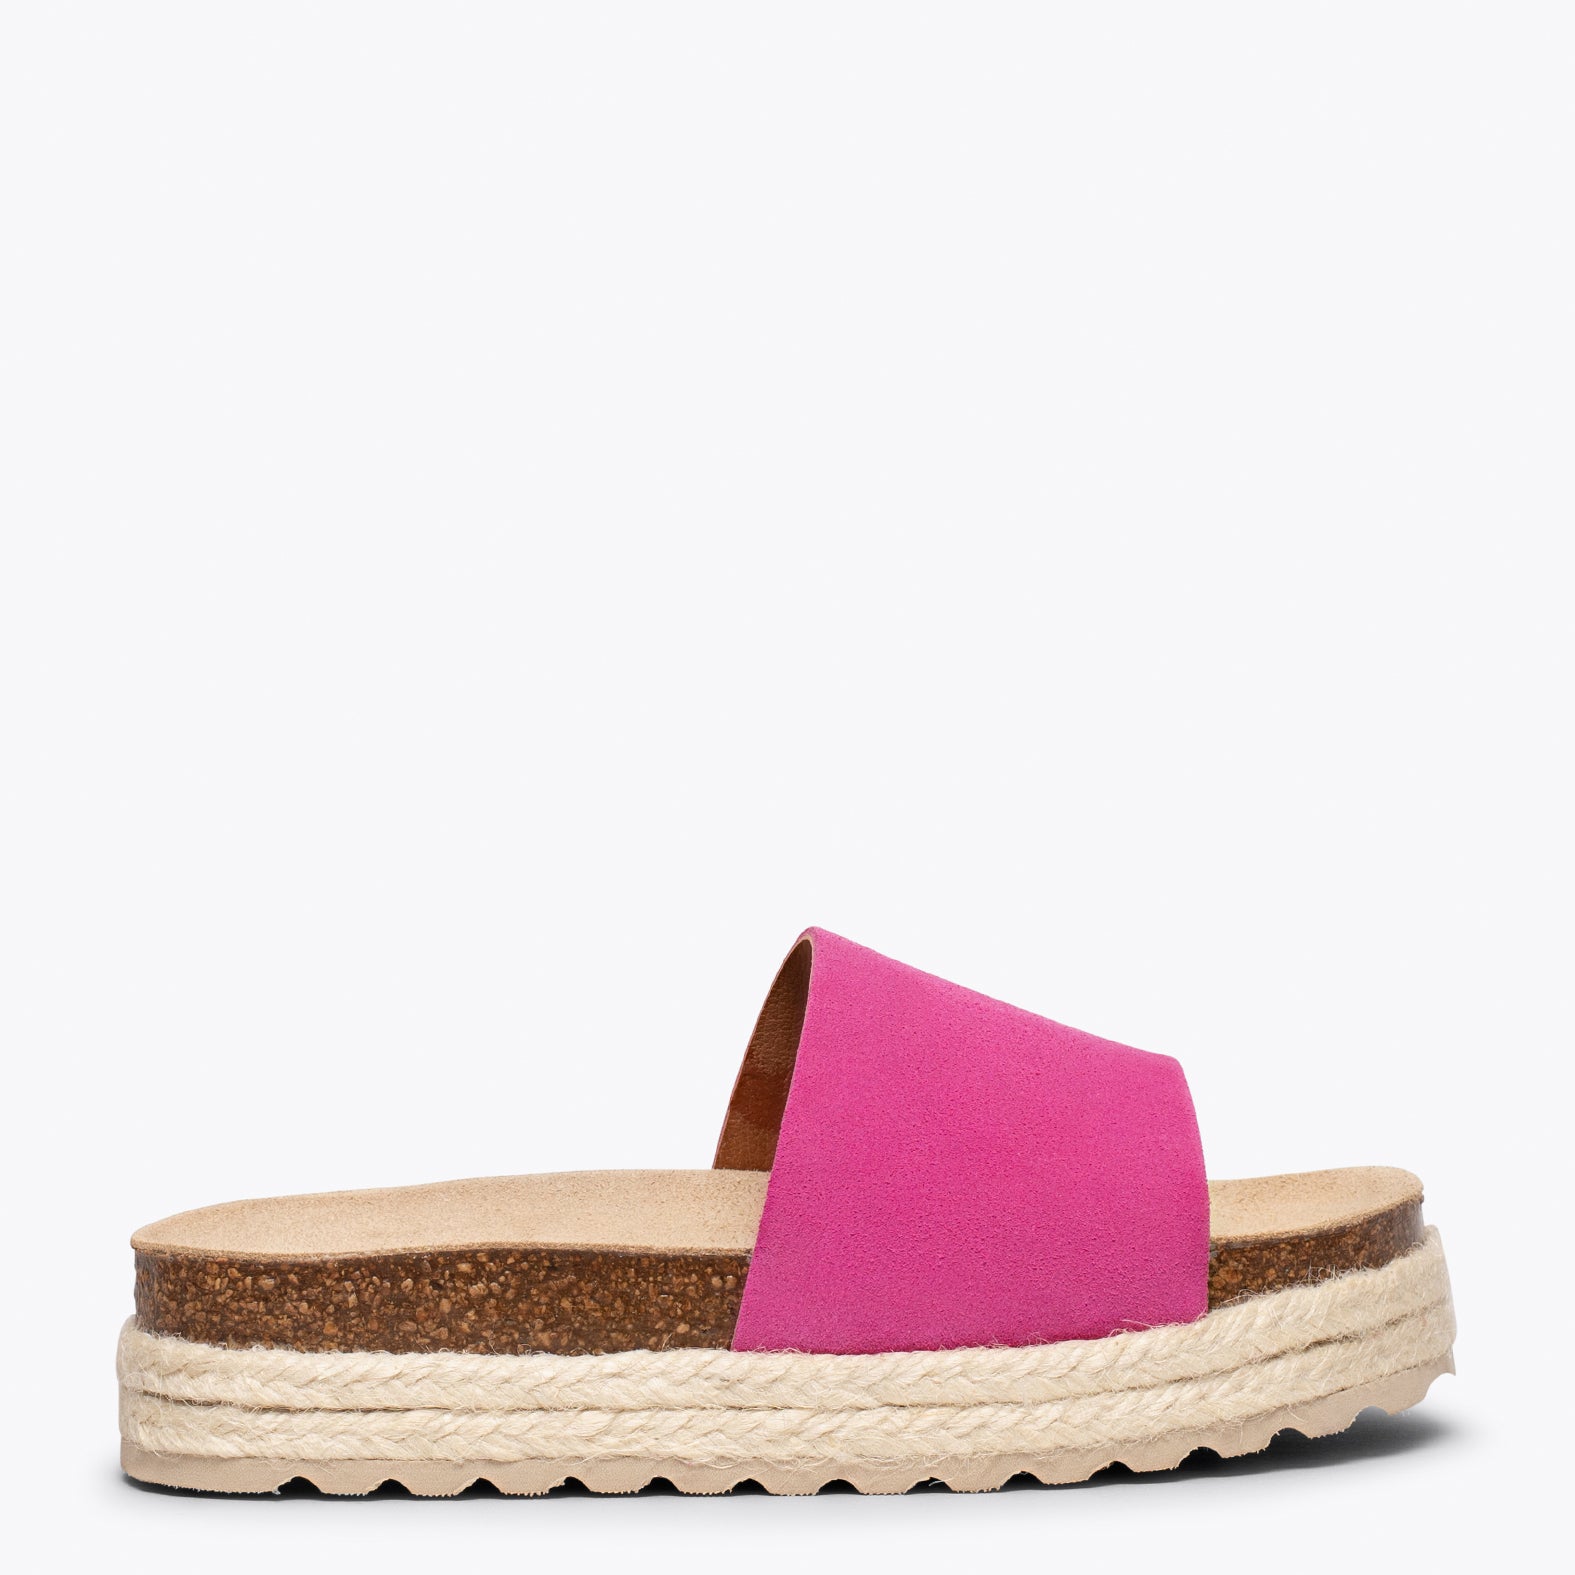 STRAWBERRY – FUCHSIA flat sandals for girls